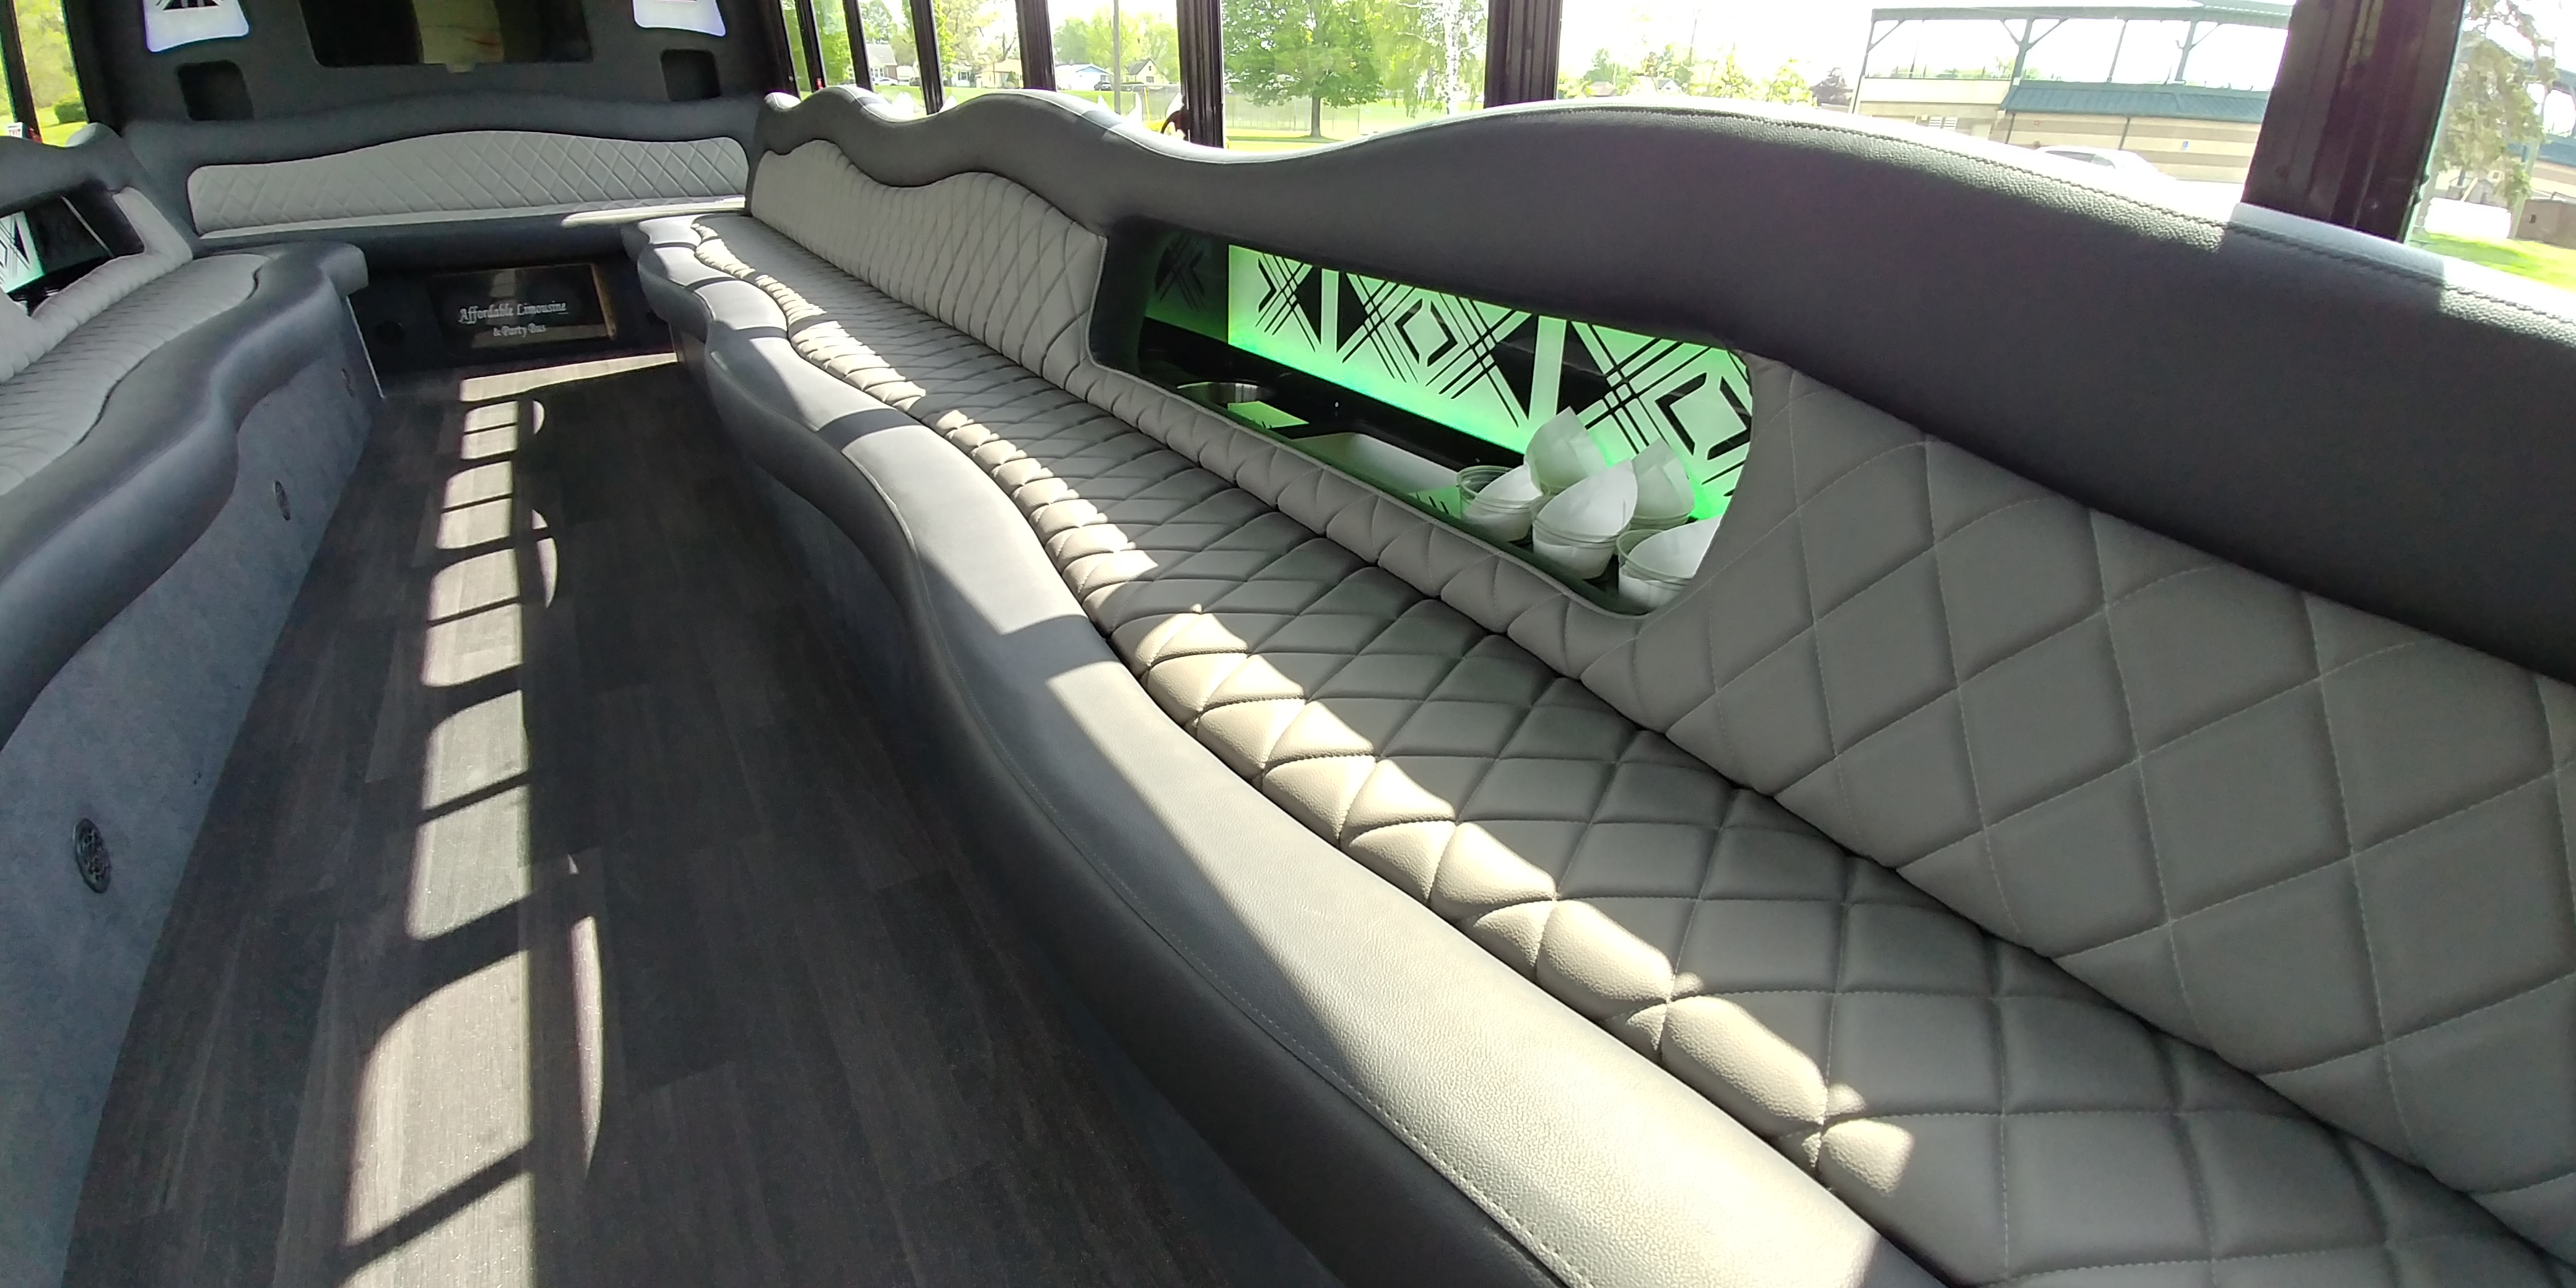 28 Passenger Luxury Limo Bus Interior 5